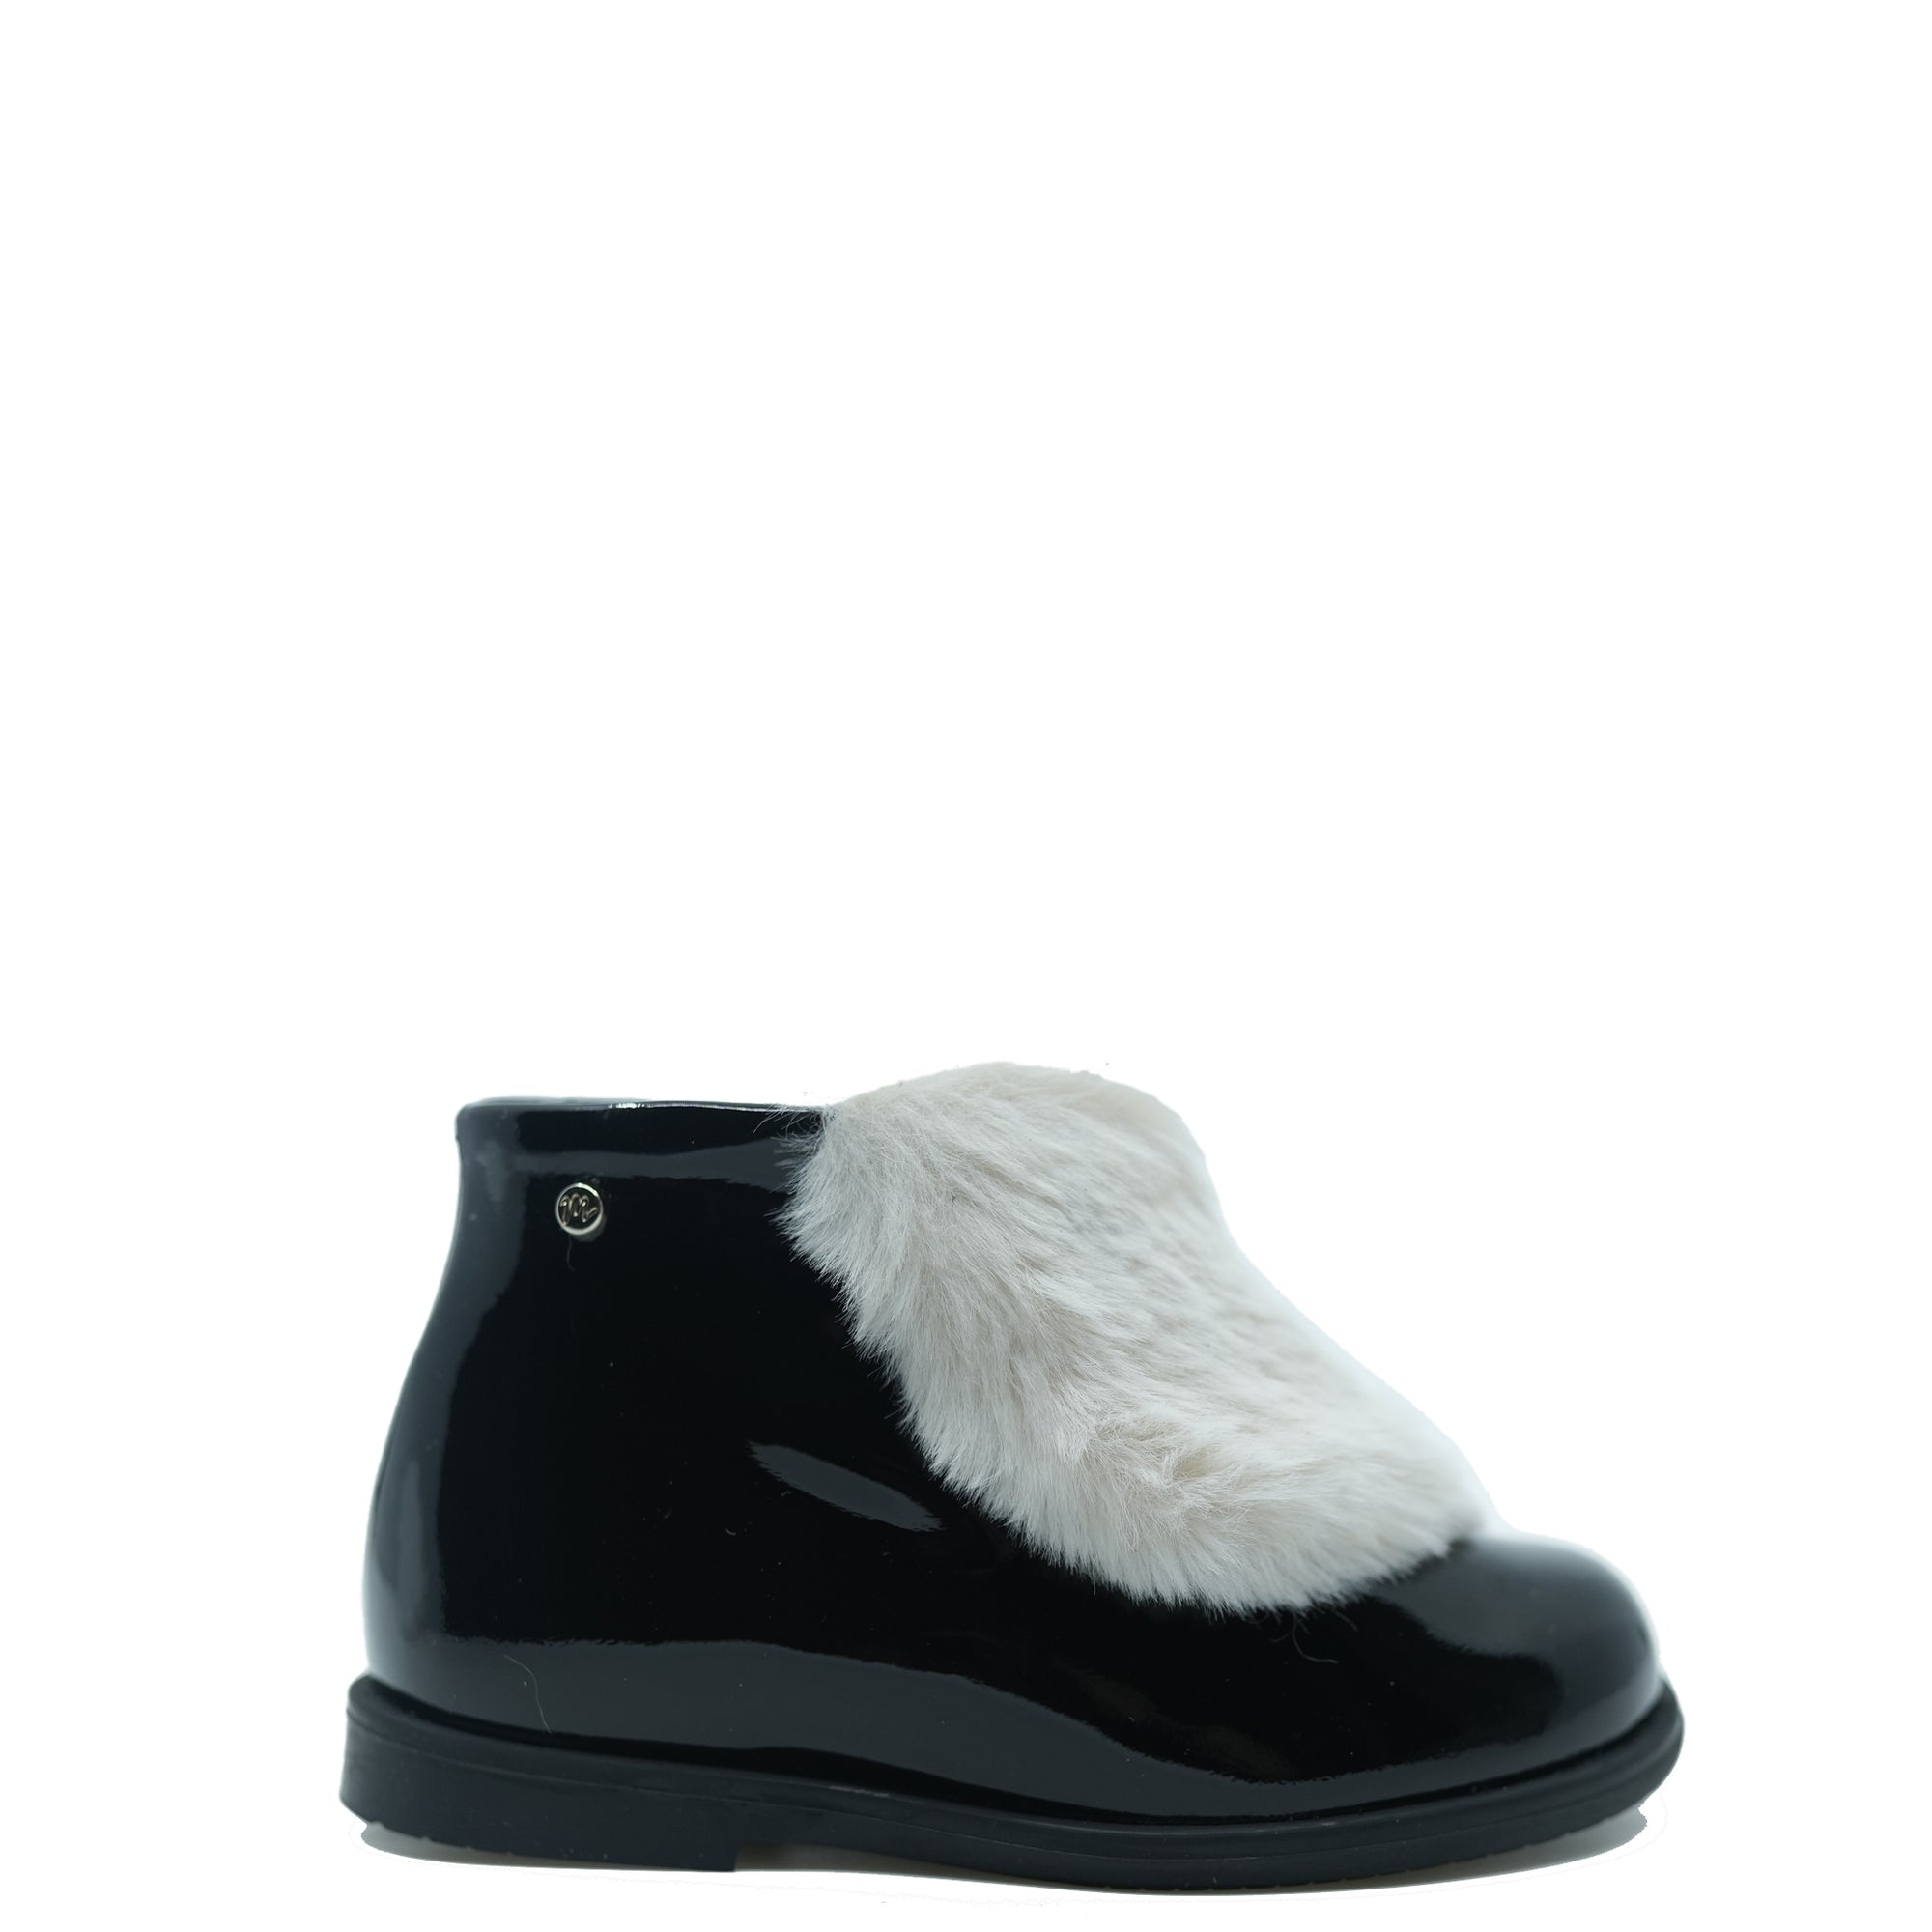 Manuela Black Patent and White Fur Baby Bootie-Tassel Children Shoes